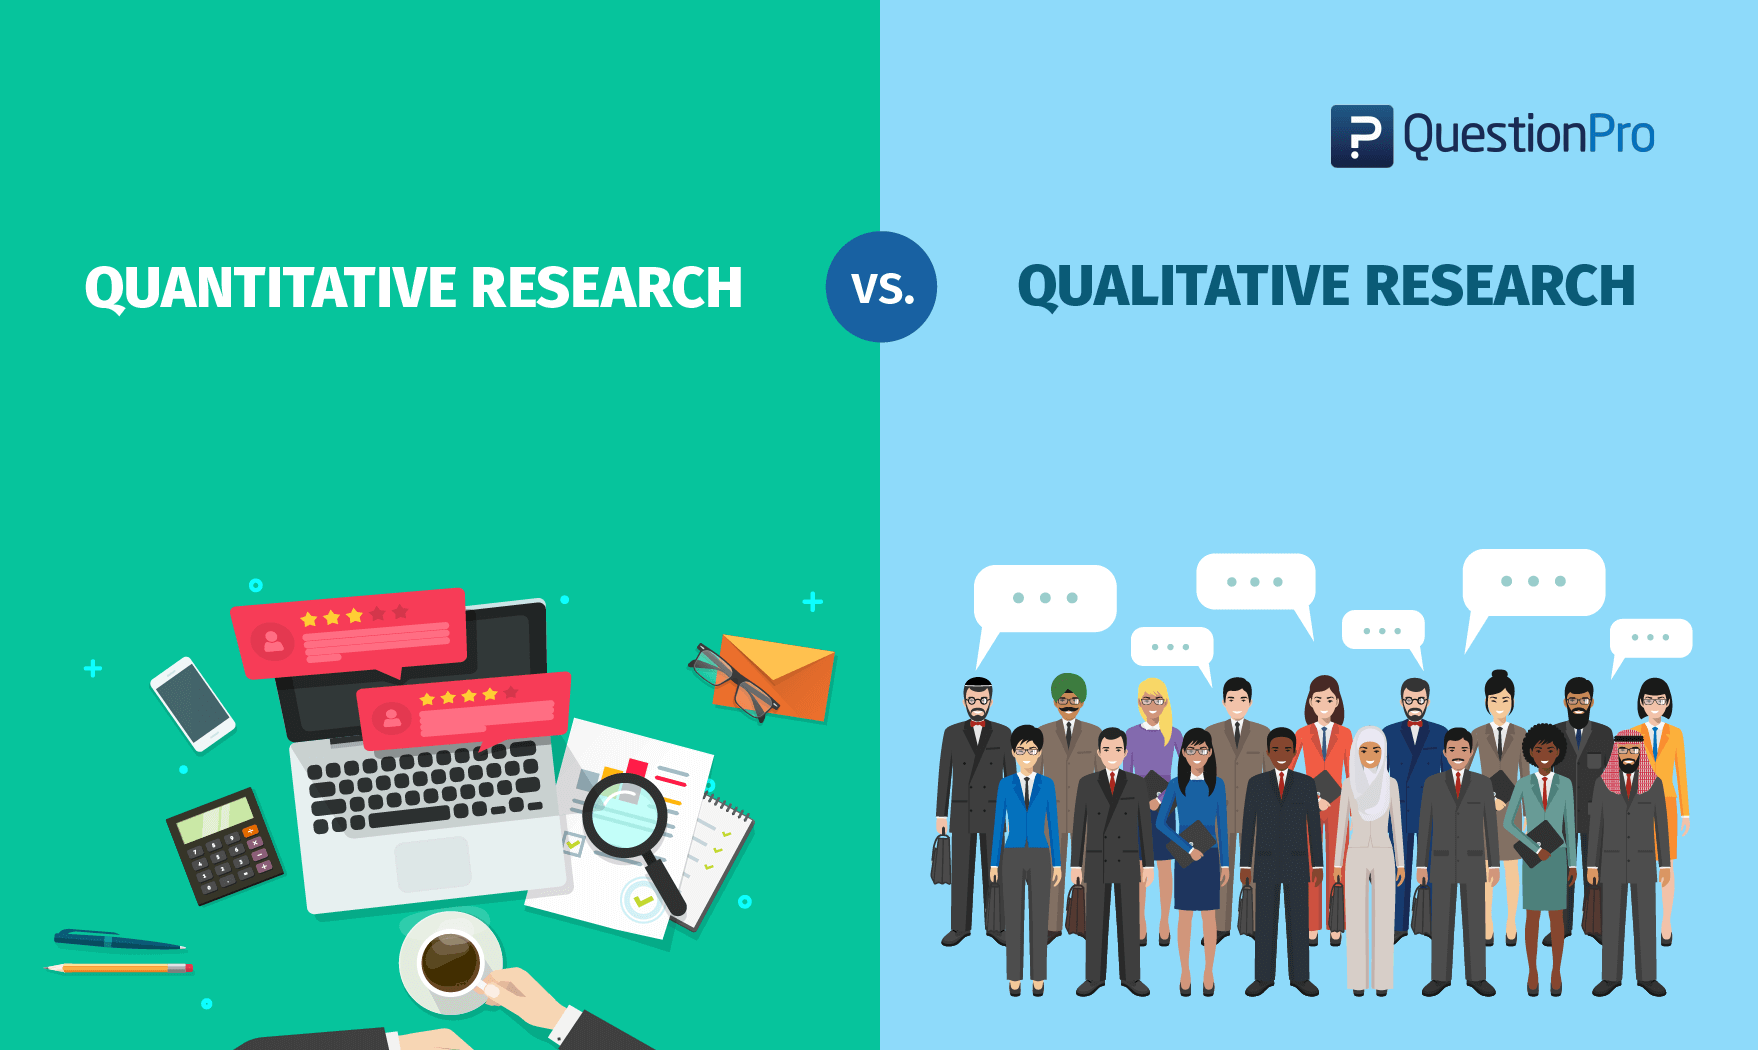 qualitative vs quantitative research methods and data analysis